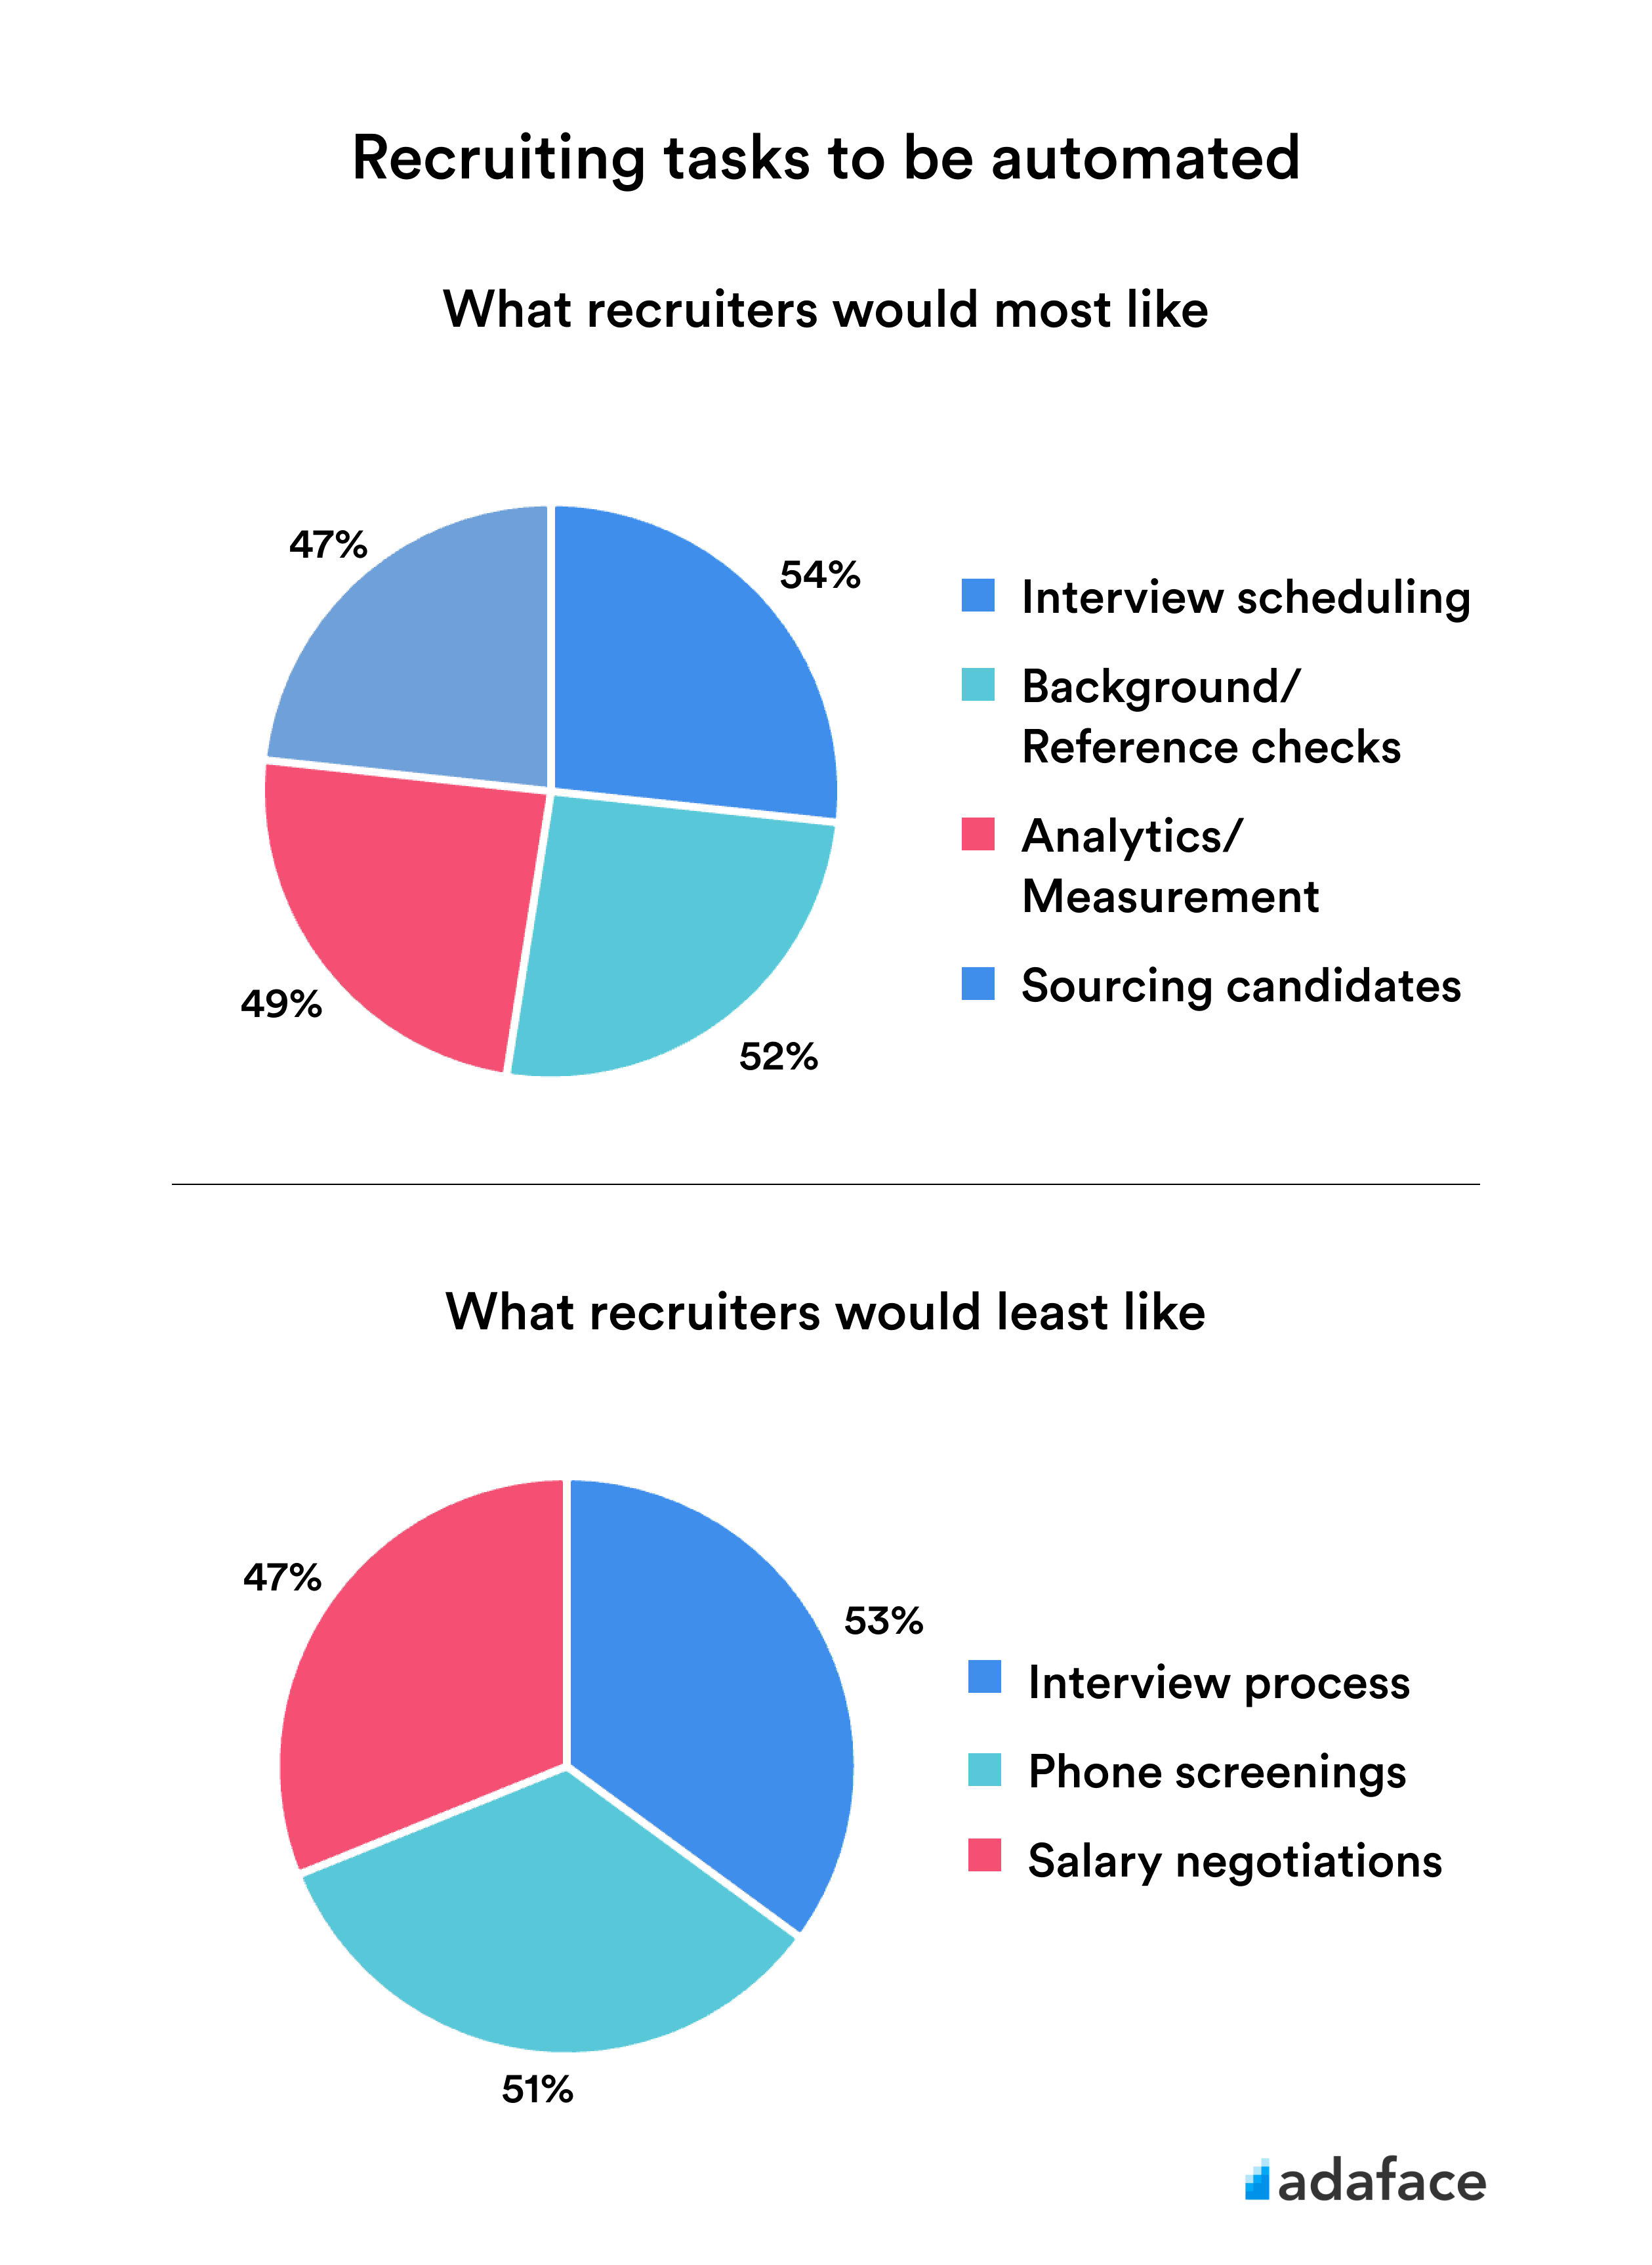 Automating recruitment tasks